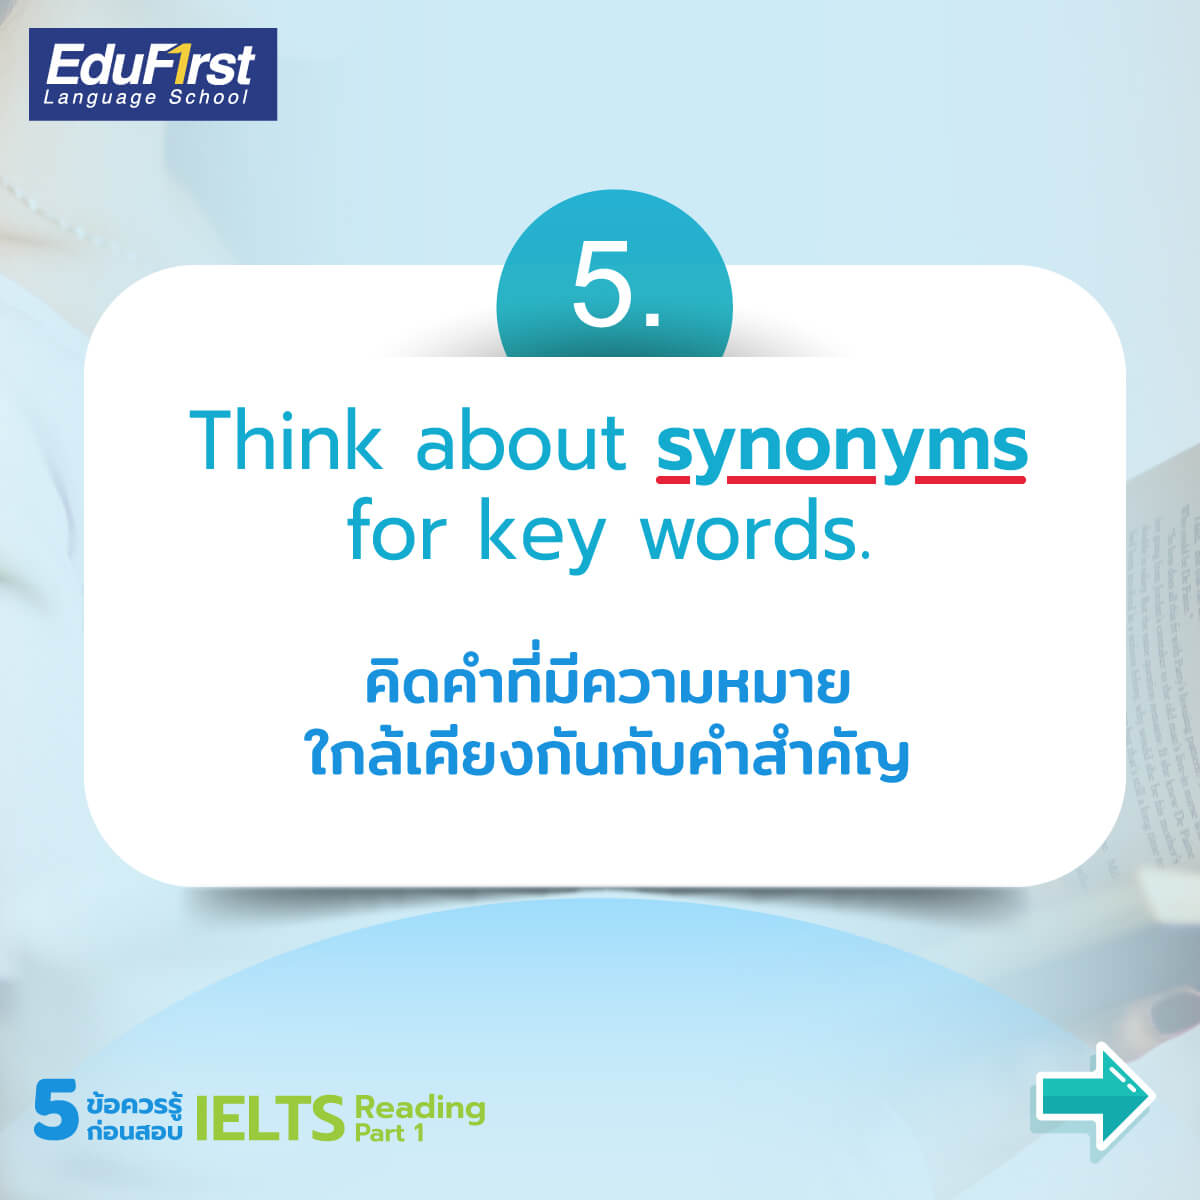 5. Think about synonyms for key words.<br />
คิดคำที่มีความหมายใกล้เคียงกันกับคำสำคัญ<br />
